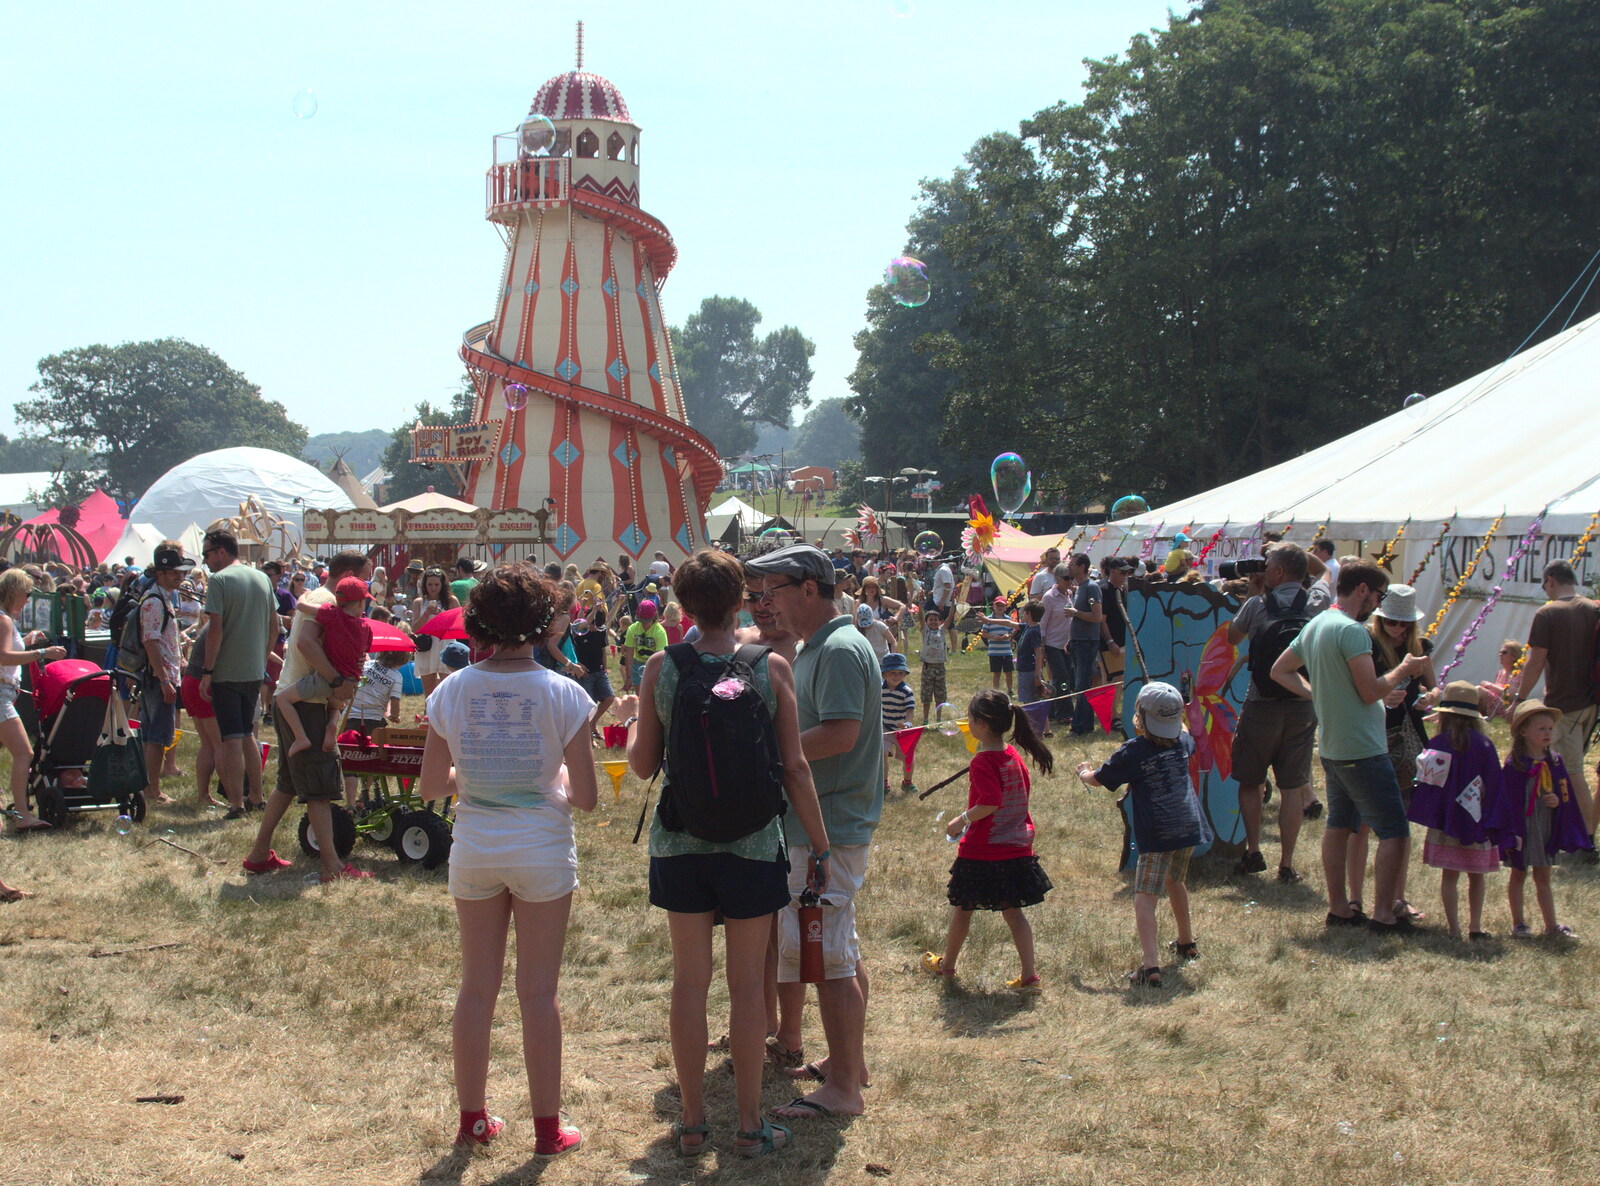 The 'kids zone' from Latitude Festival, Henham Park, Southwold, Suffolk - 17th July 2014